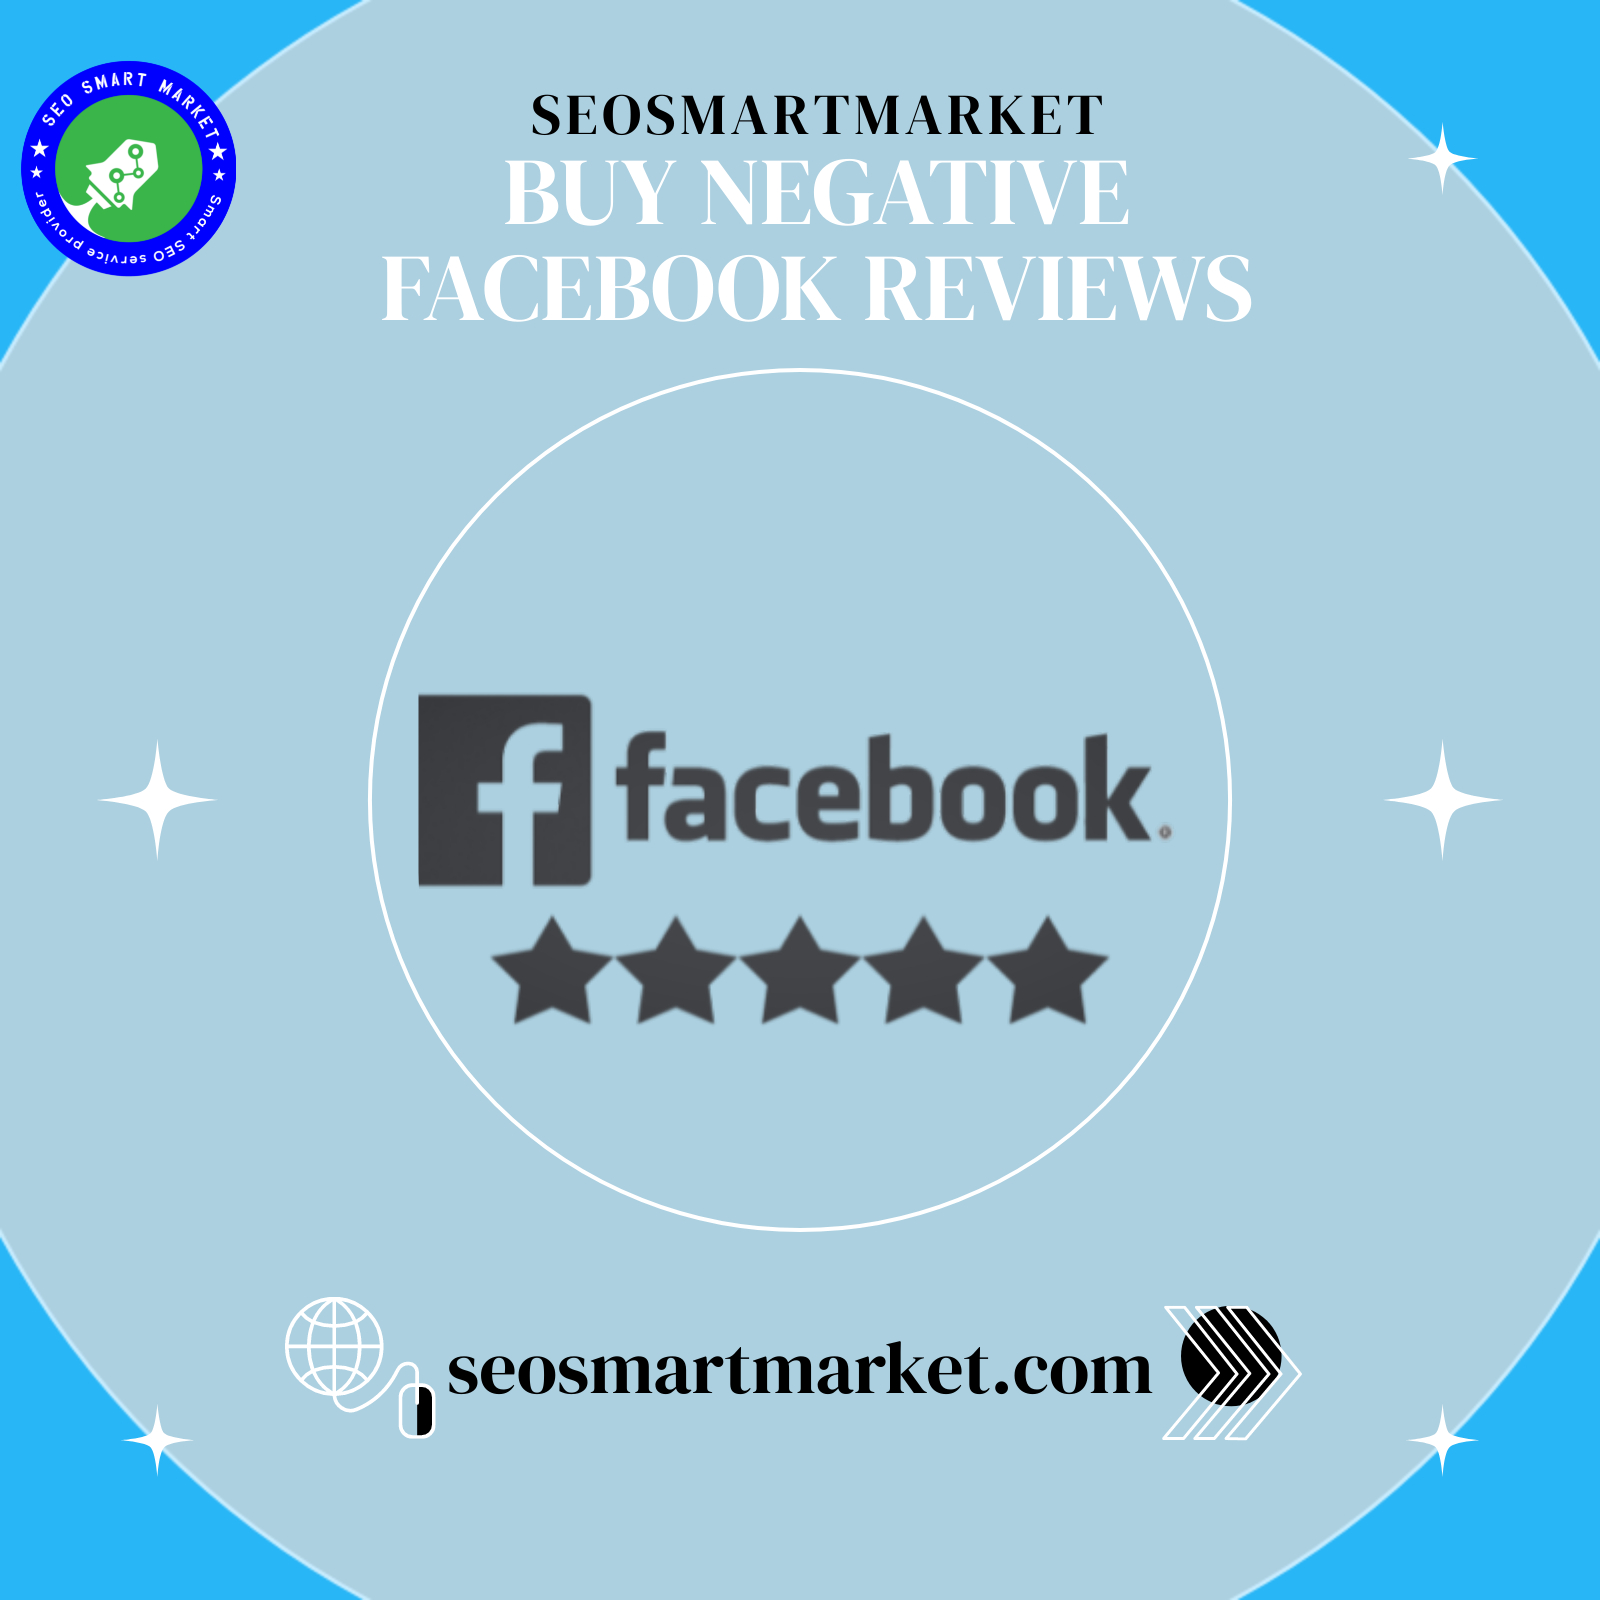 Buy Negative Facebook Reviews | 1 Star Negative Reviews Cheap